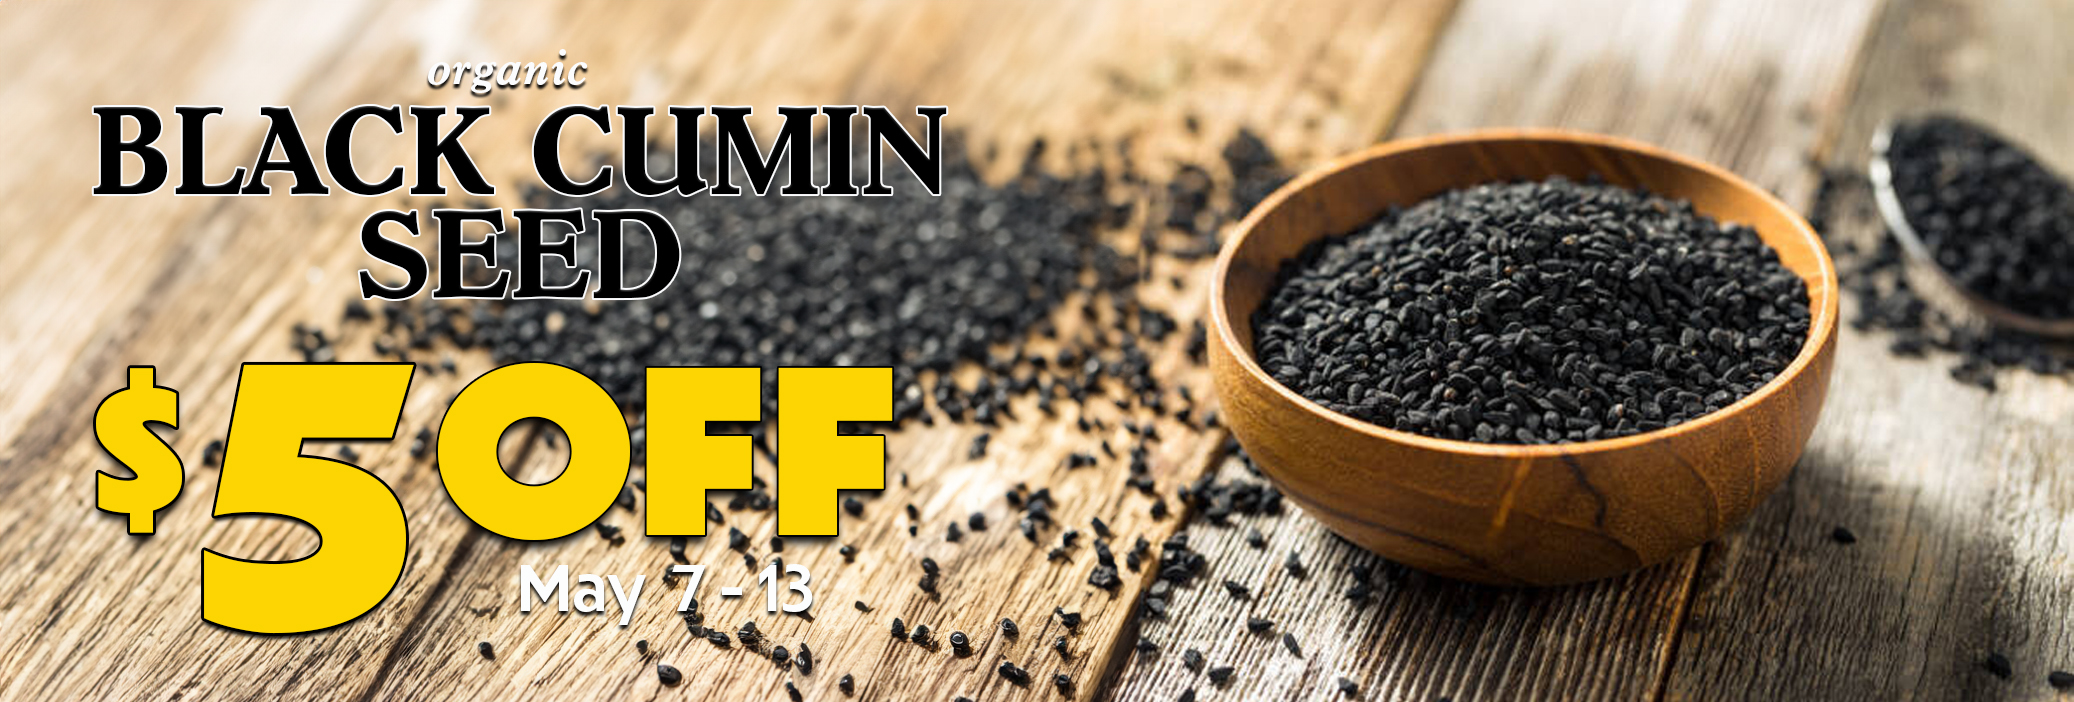 Black Cumin Seed Weekly Sale Banner